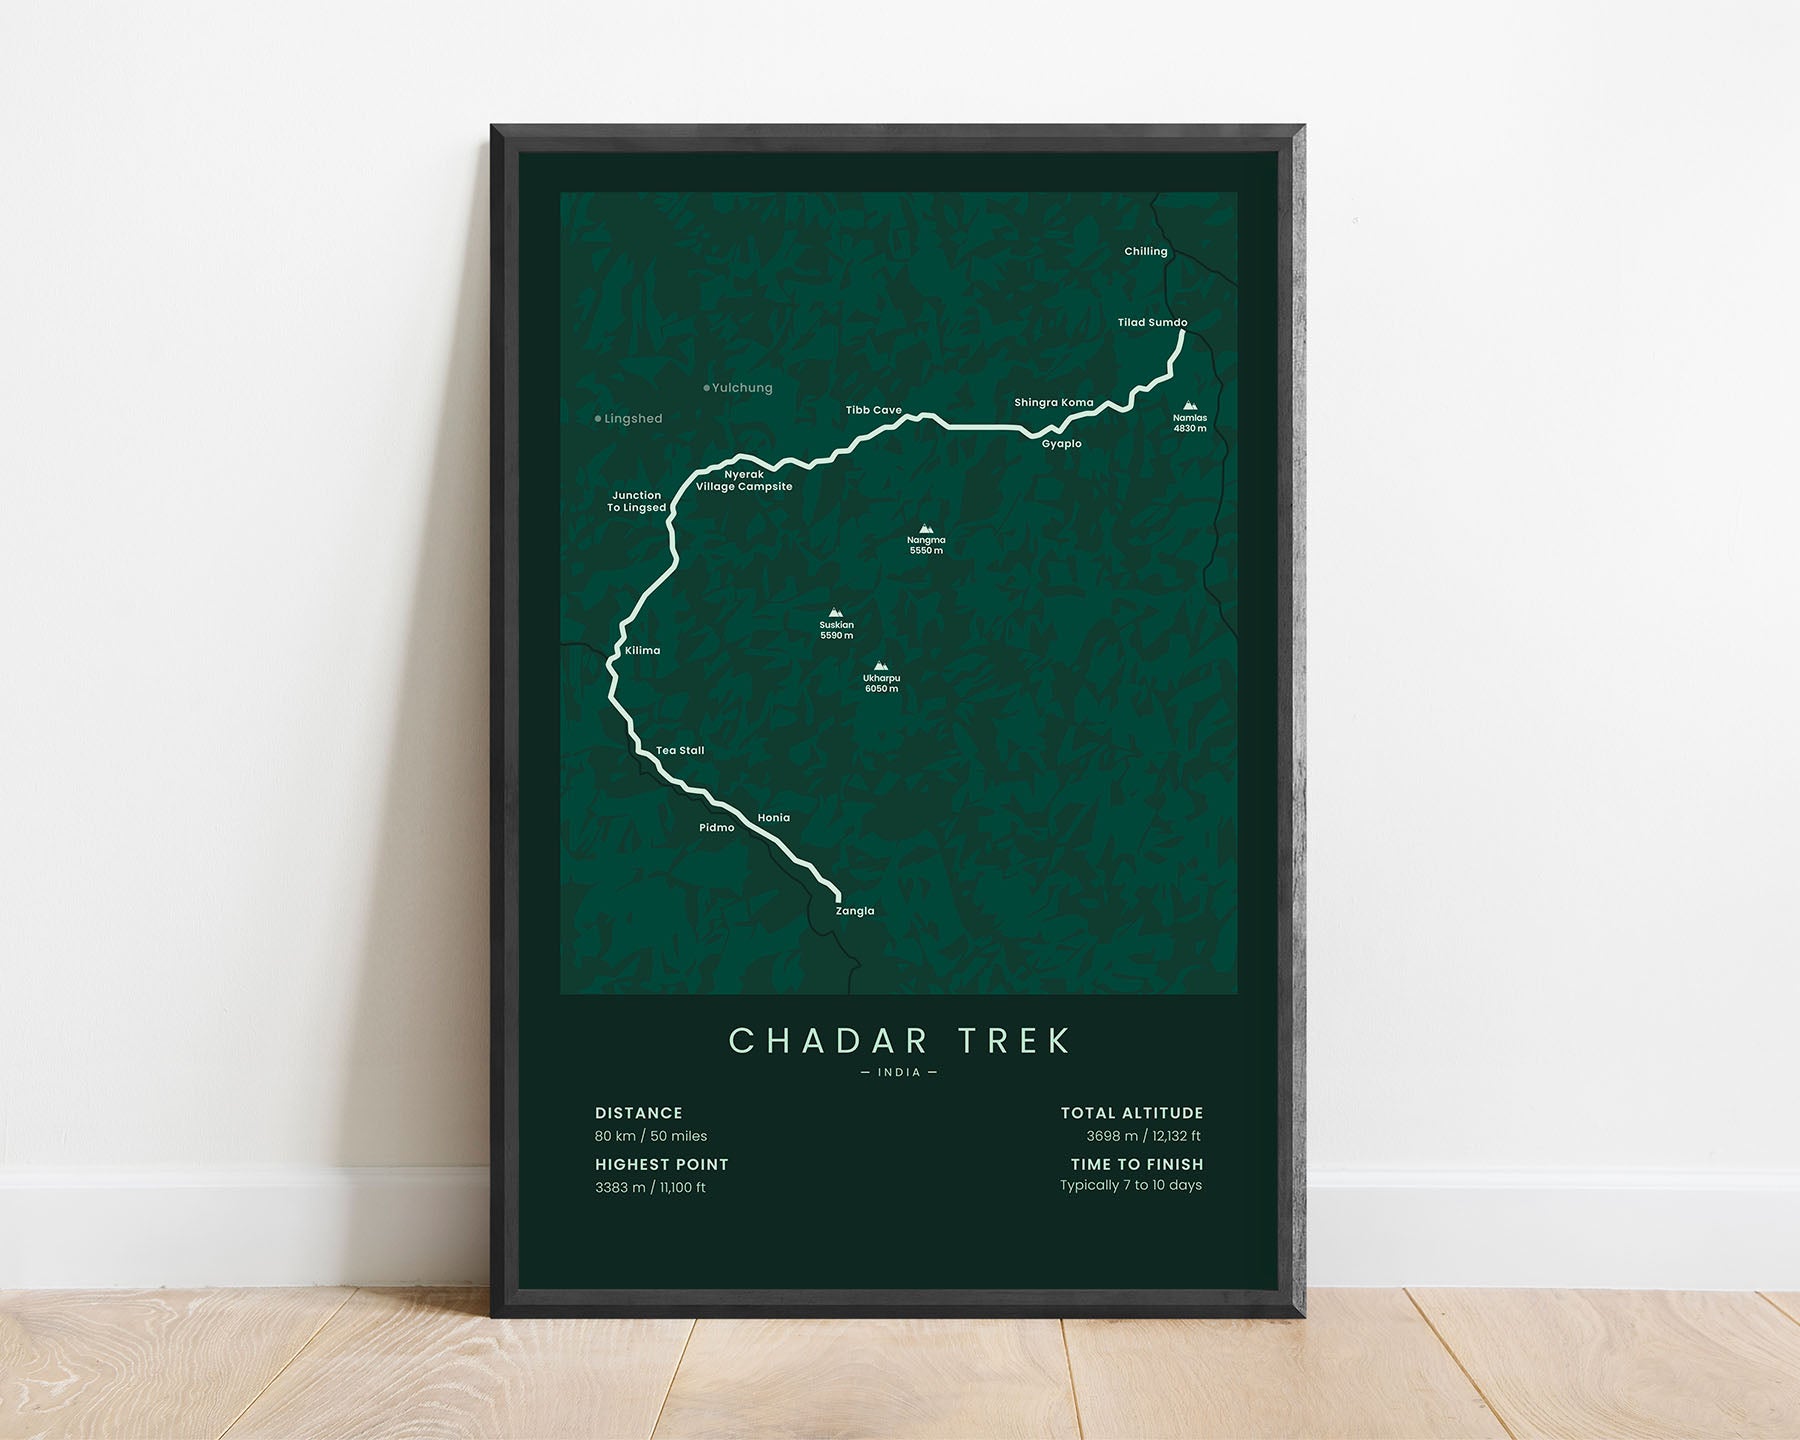 Chadar Trek (Zanskar River) track poster with green background